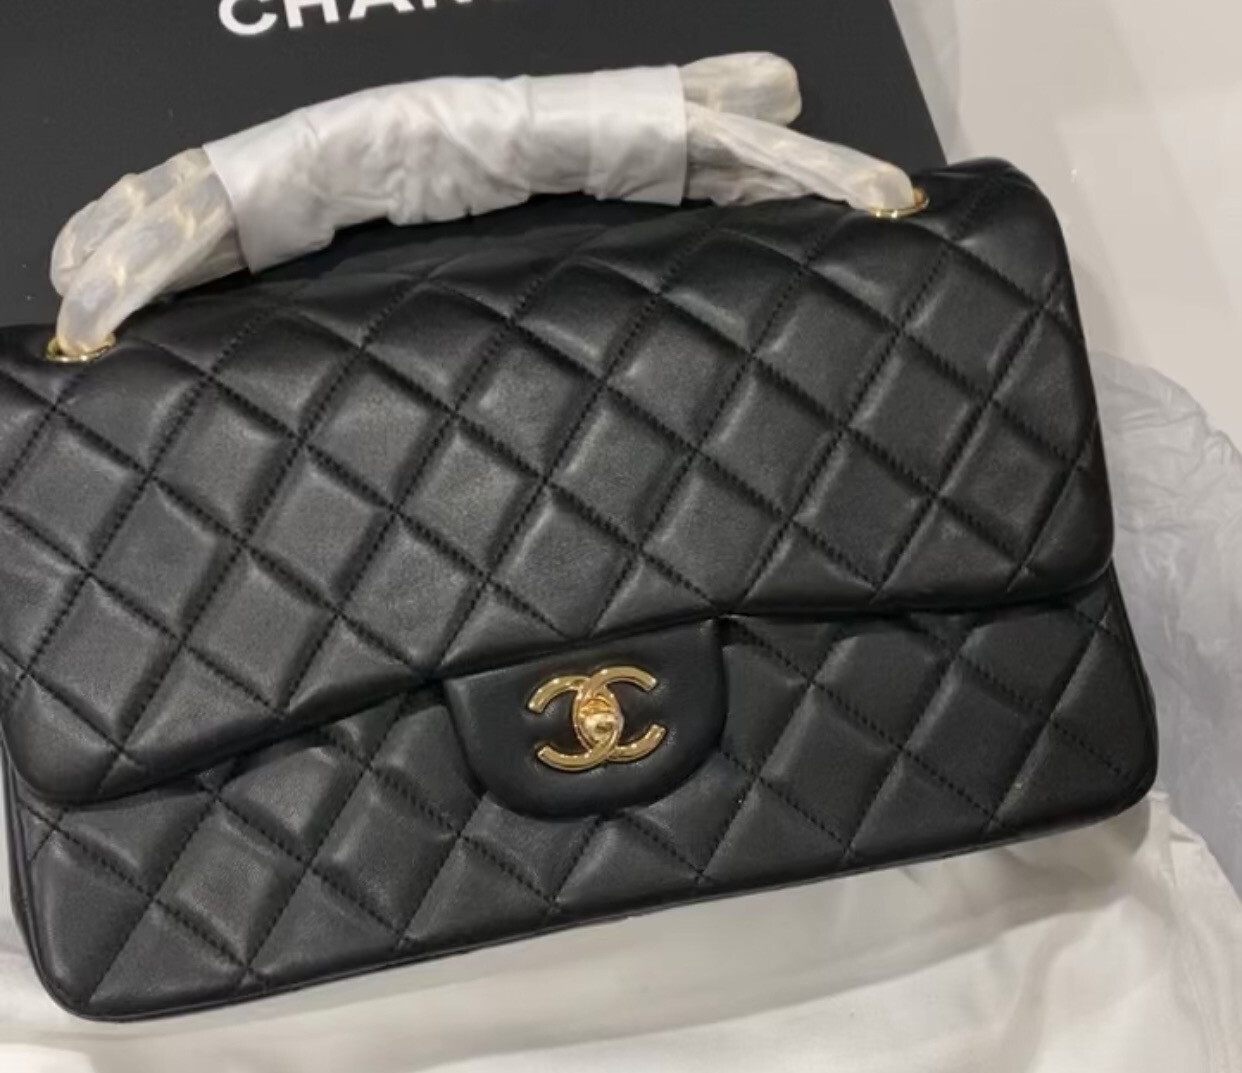 IN STOCK - 1:1 Chanel Classic JUMBO Double Flap Bag - NUDE Lambskin SILVER hardware